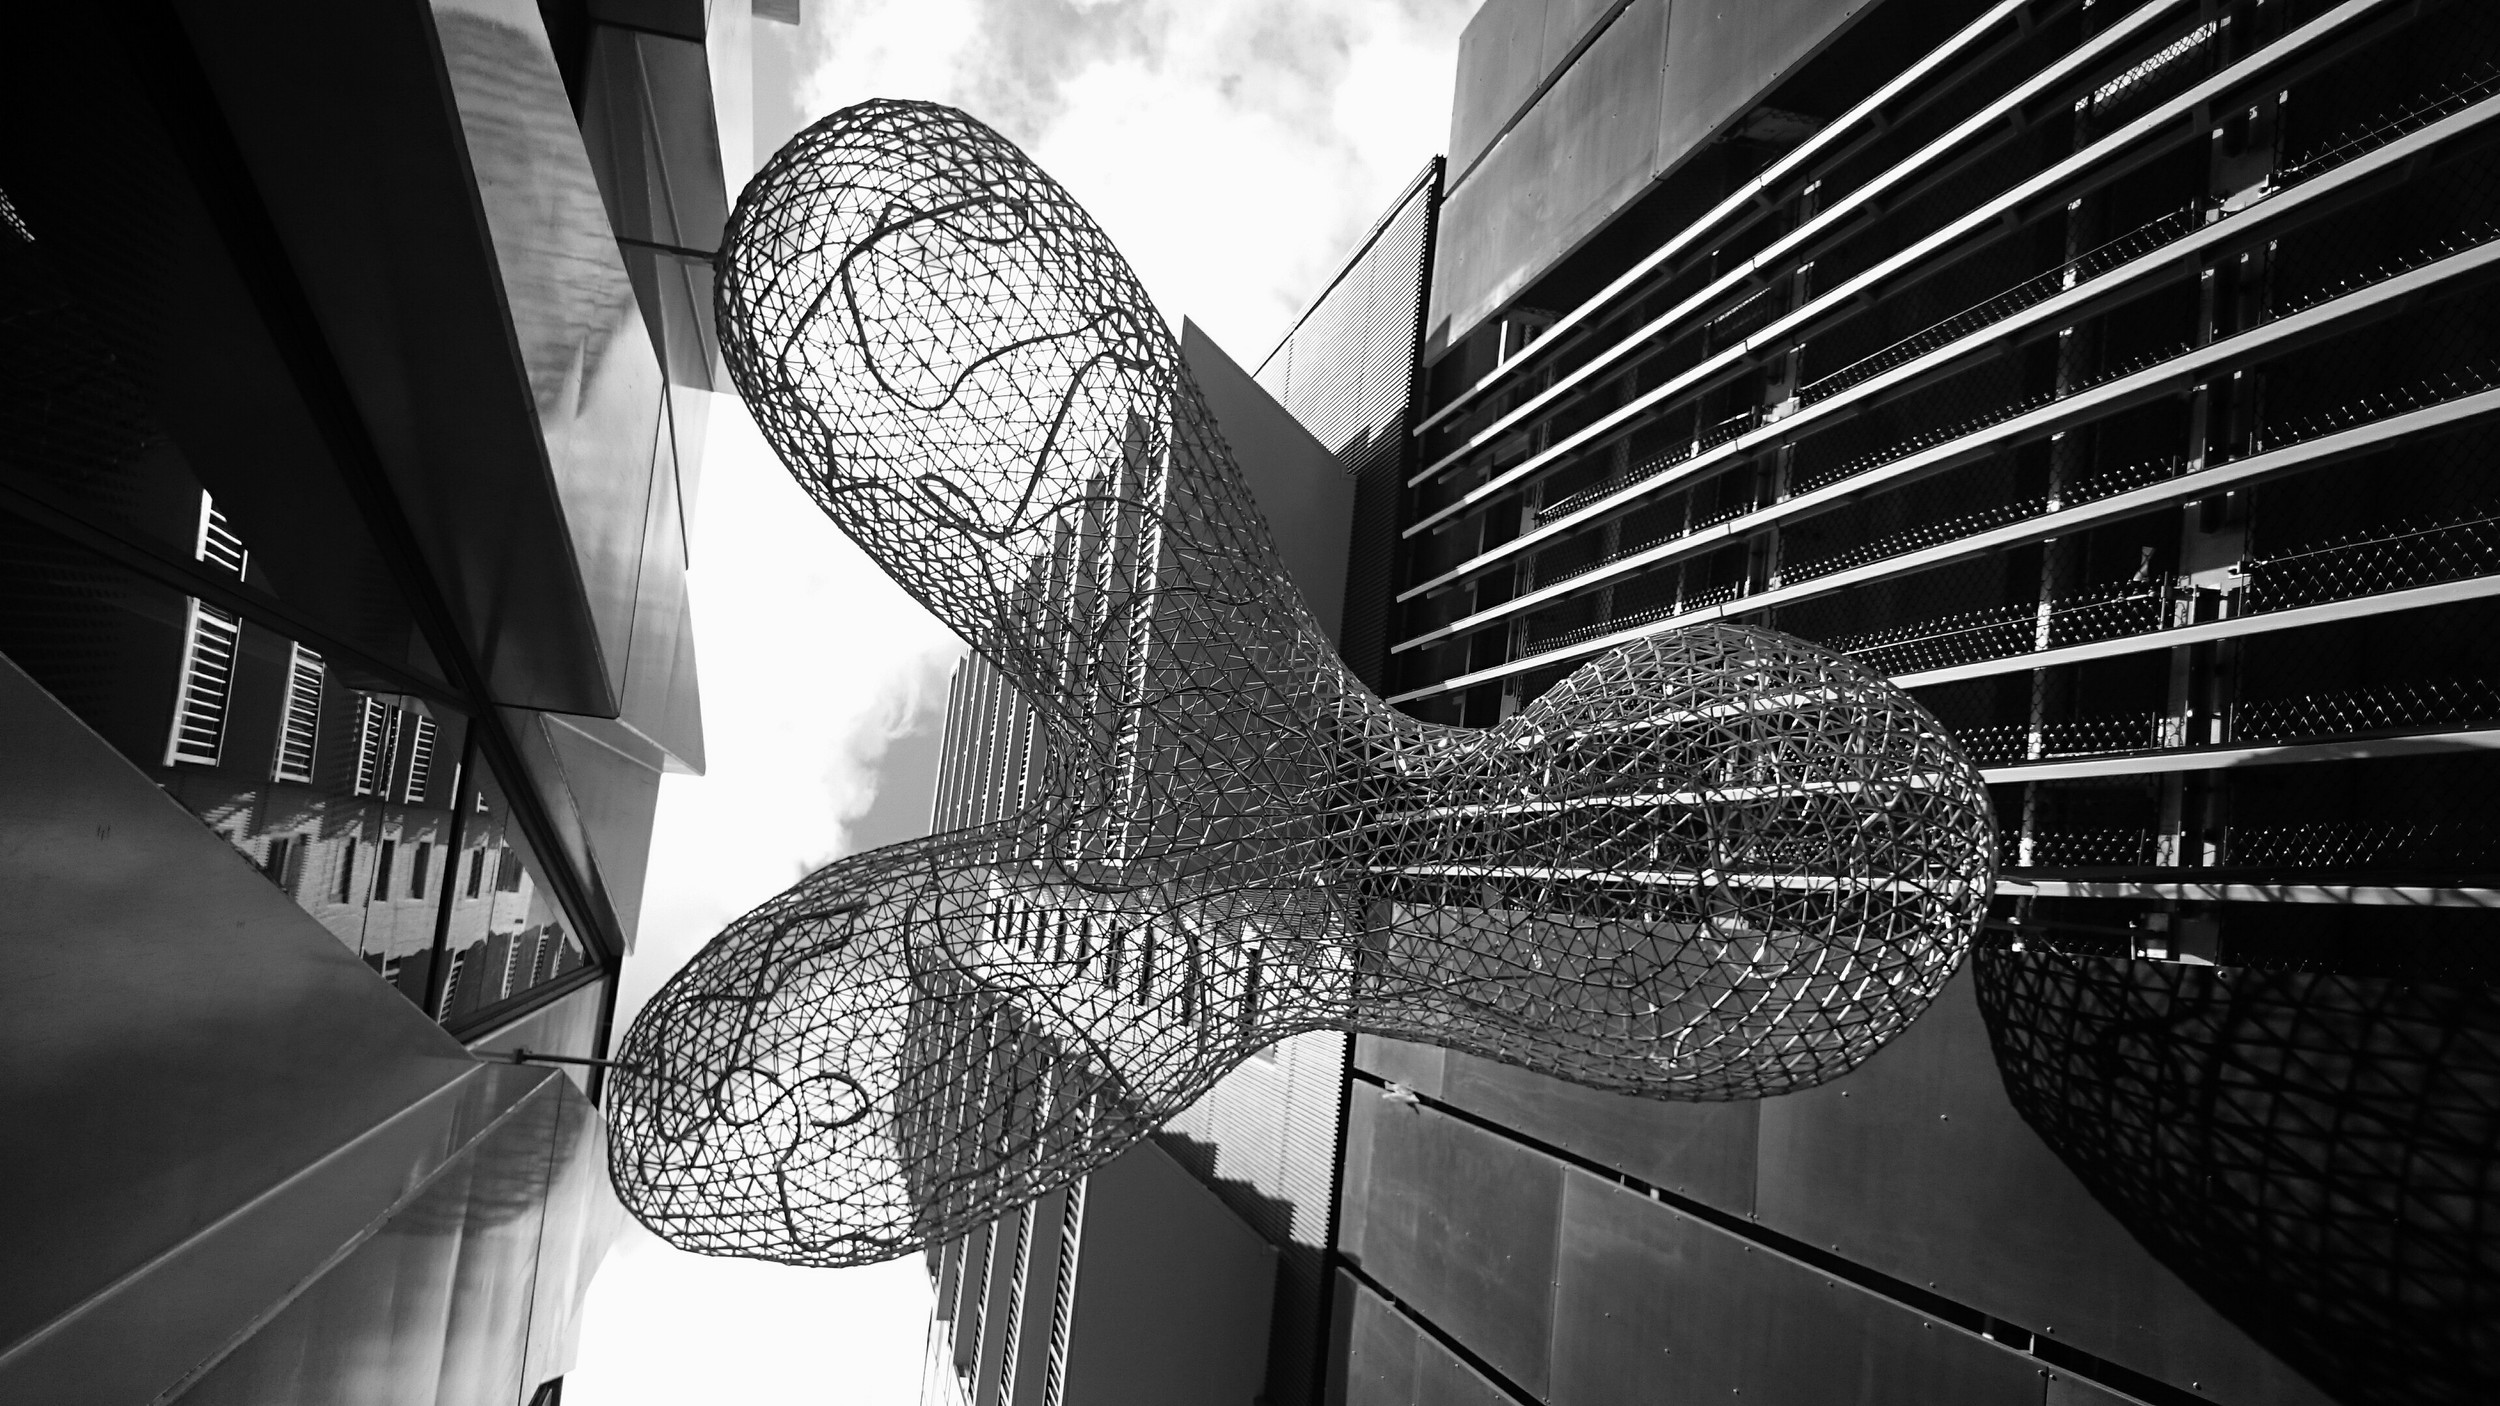   Transit Cloud  2015 Collaboration:&nbsp; S  ara Hughes &nbsp;&amp;&nbsp; Gregor Kregar  Public Art Project commissioned by Auckland Council. 